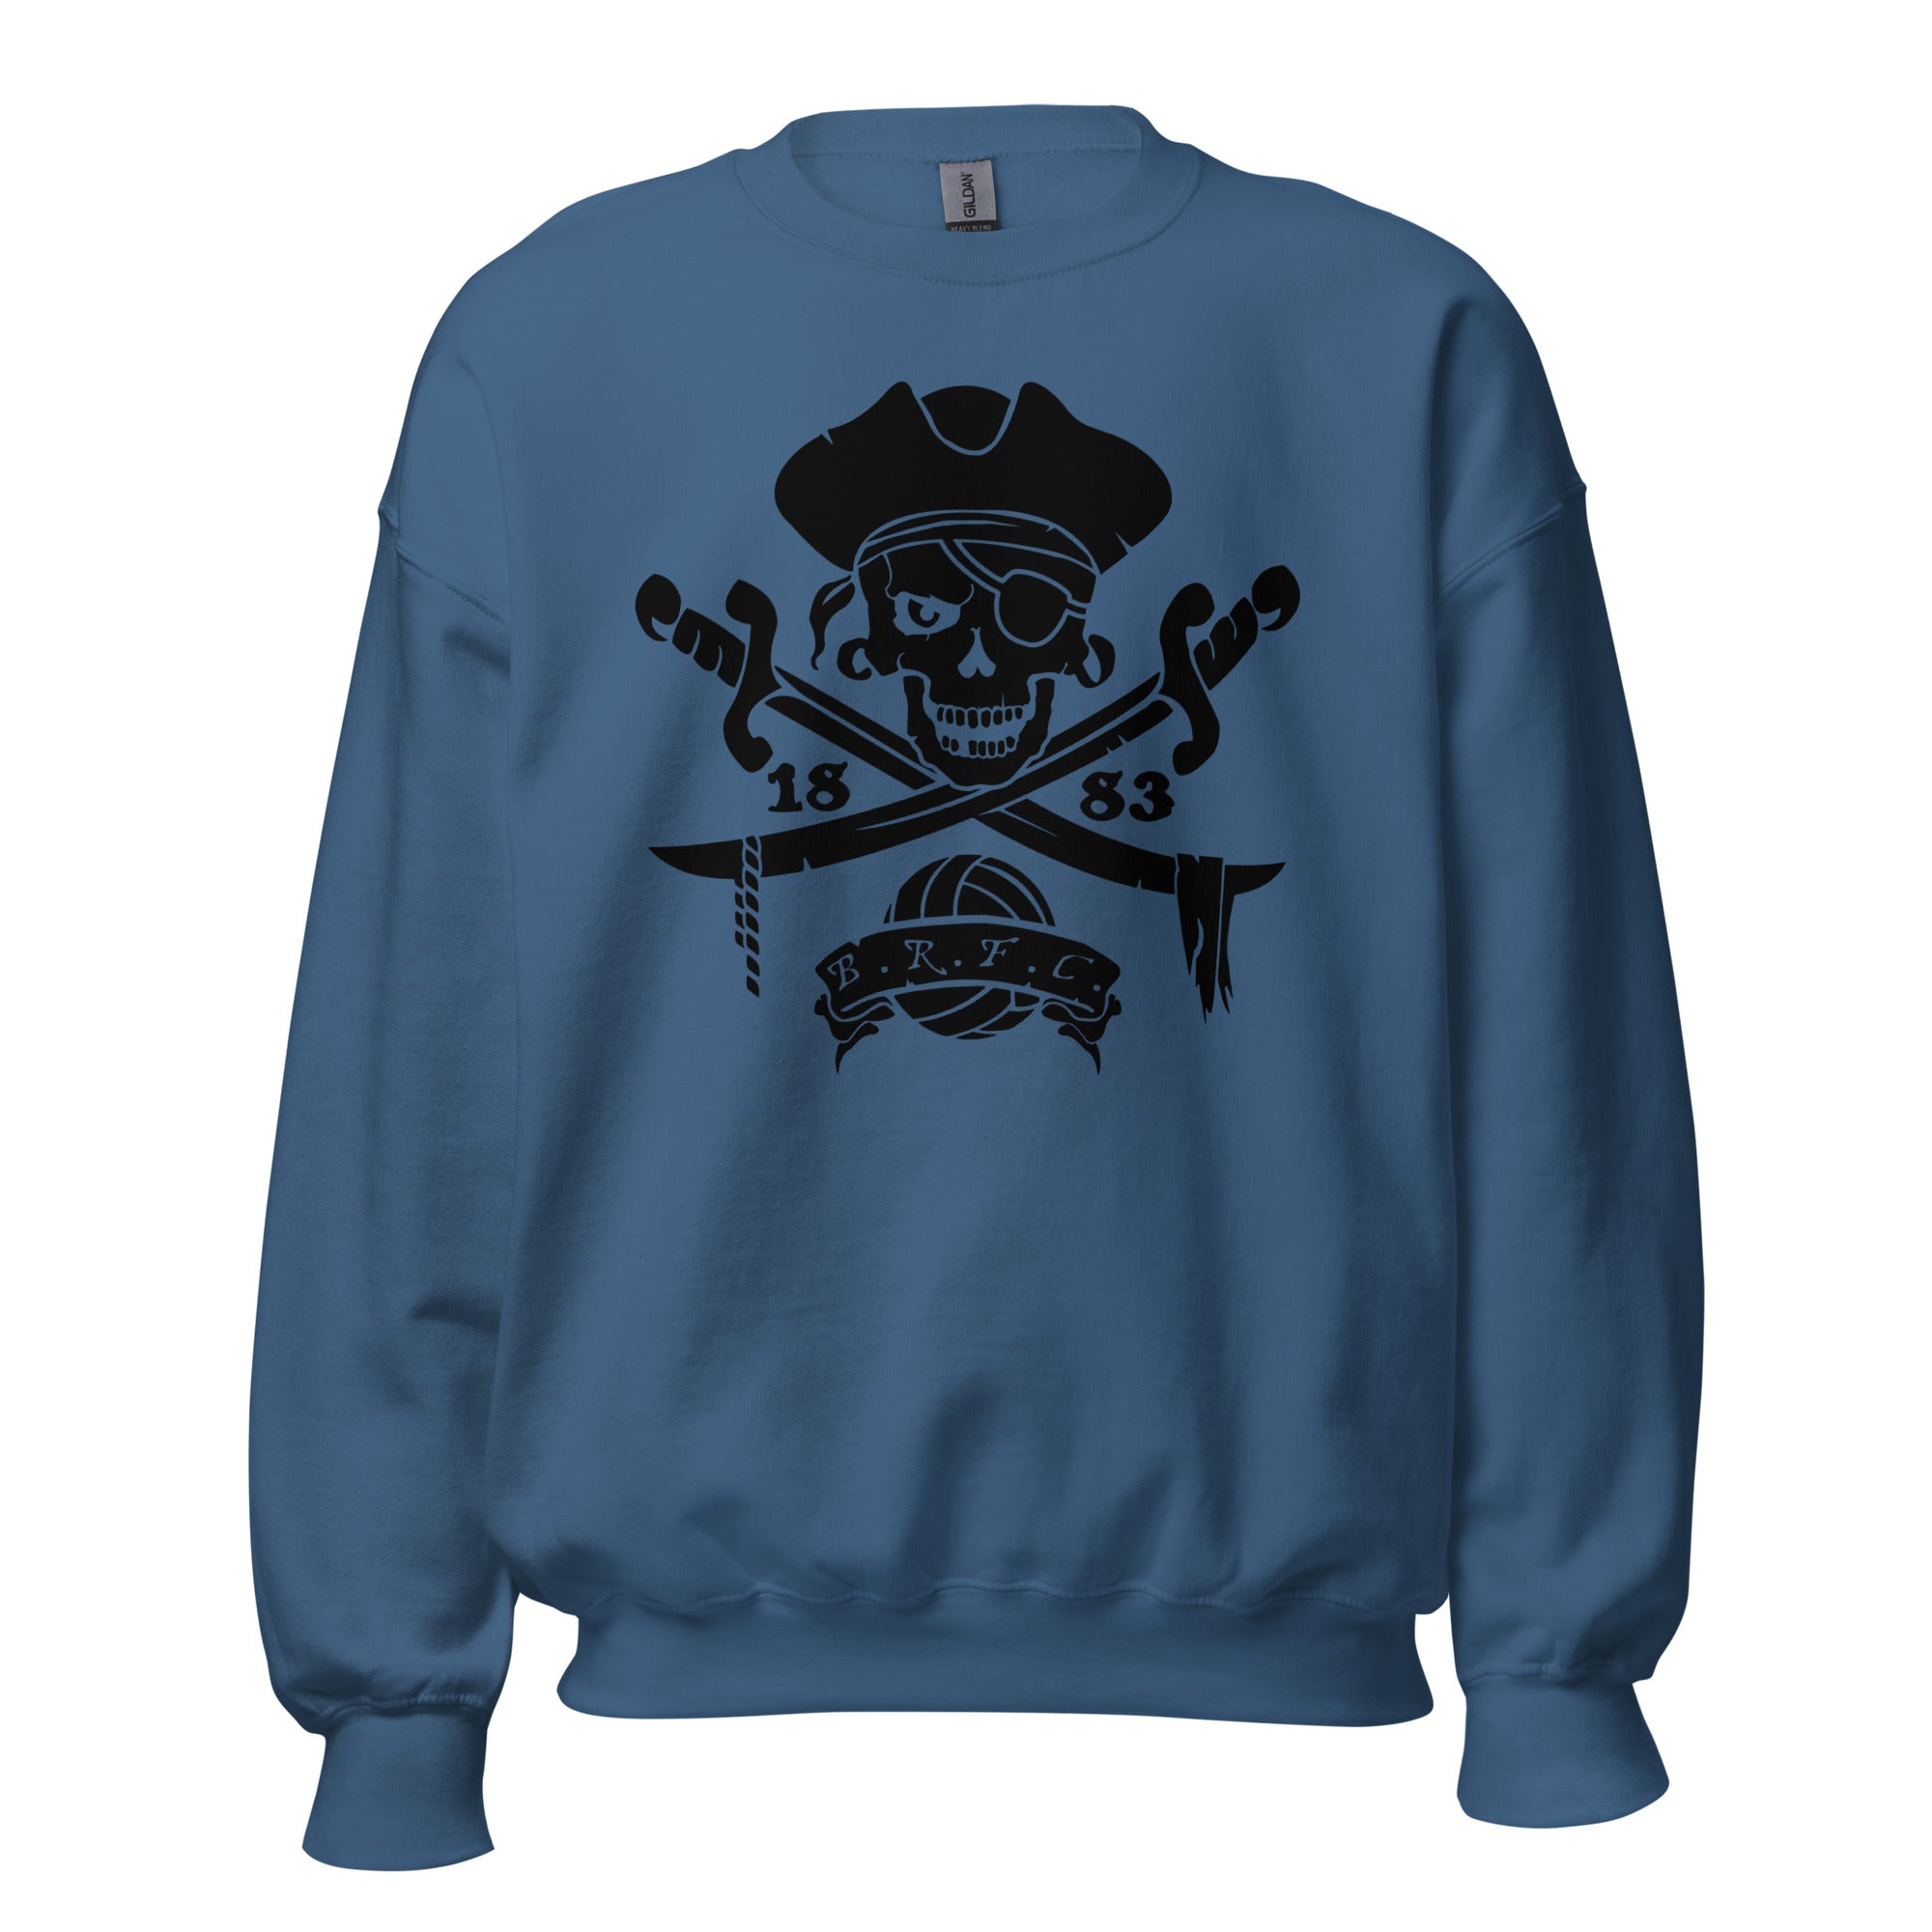 Unisex Crew Neck Sweatshirt - Pirate B.R.F.C. 1883 - GRAPHIC T-SHIRTS